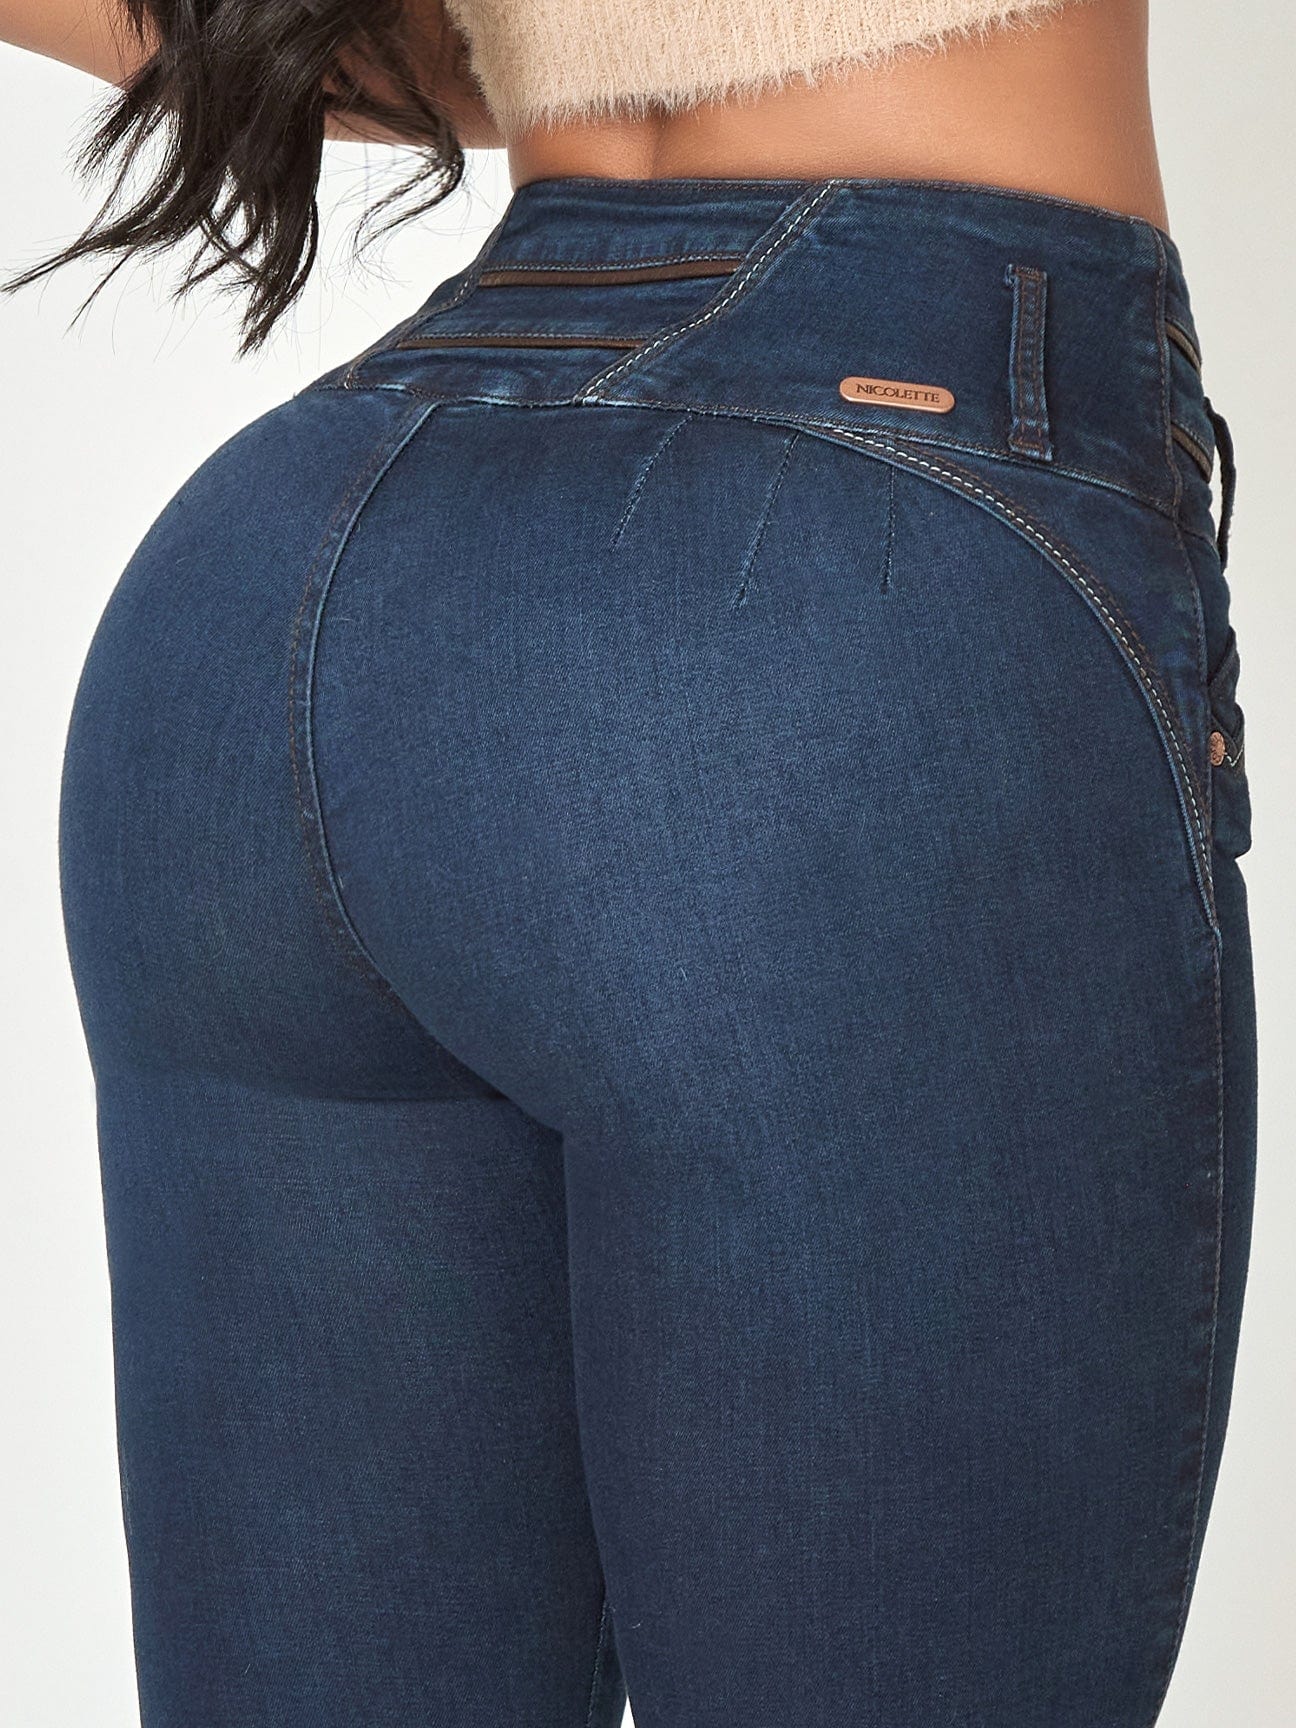 Mia High Rise Skinny Jeans back waist view.